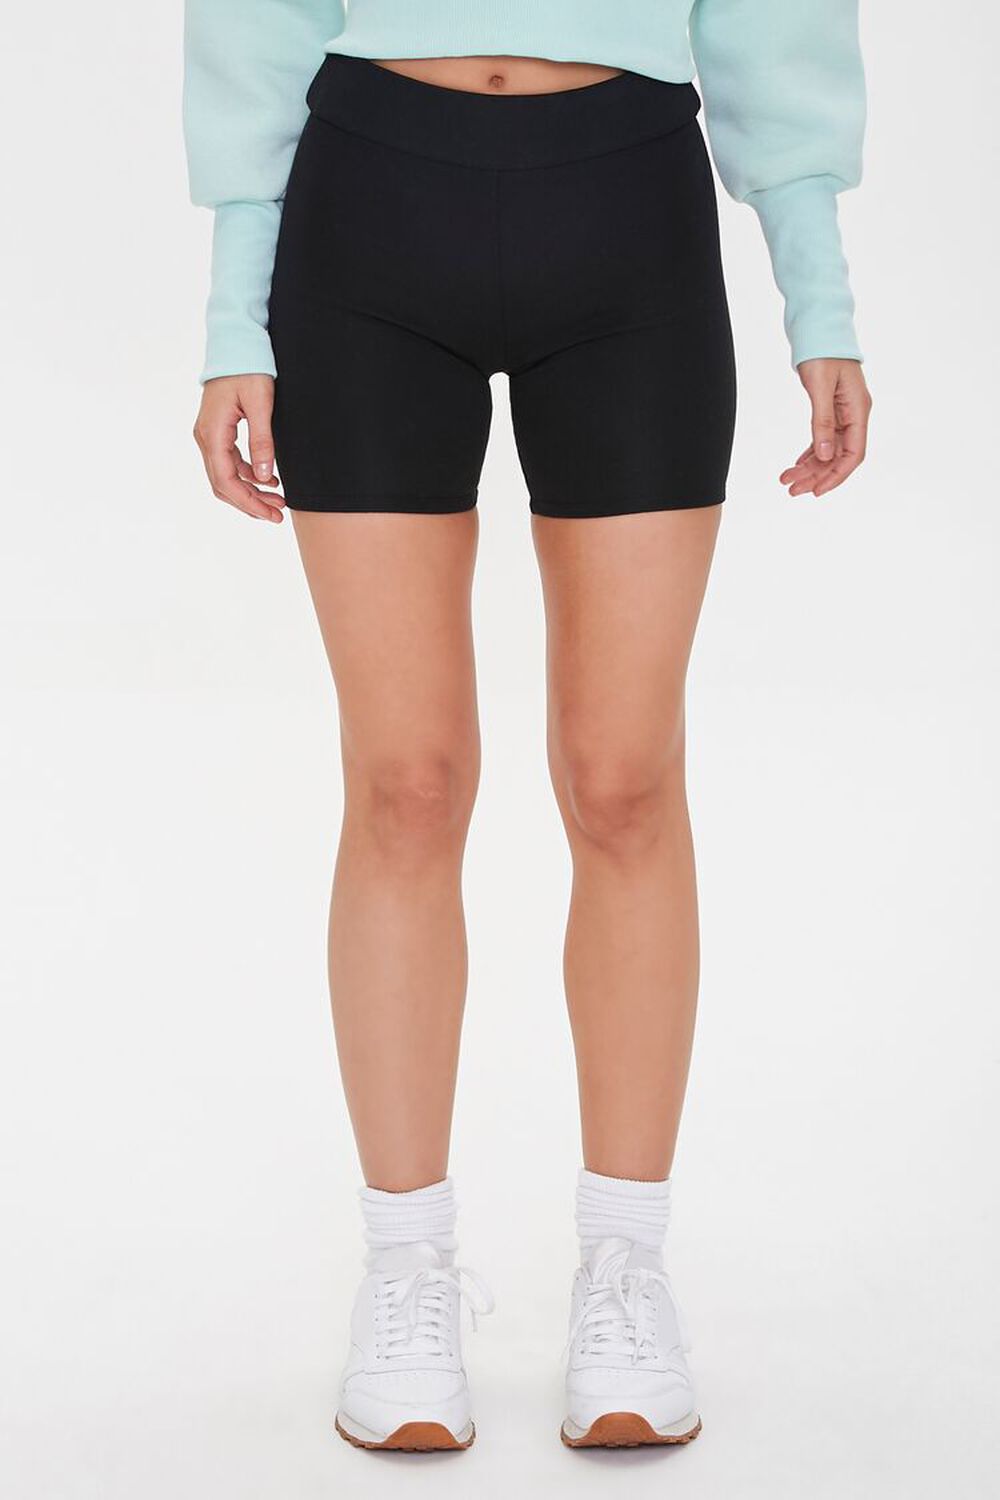 BLACK Cotton-Blend Biker Shorts, image 2